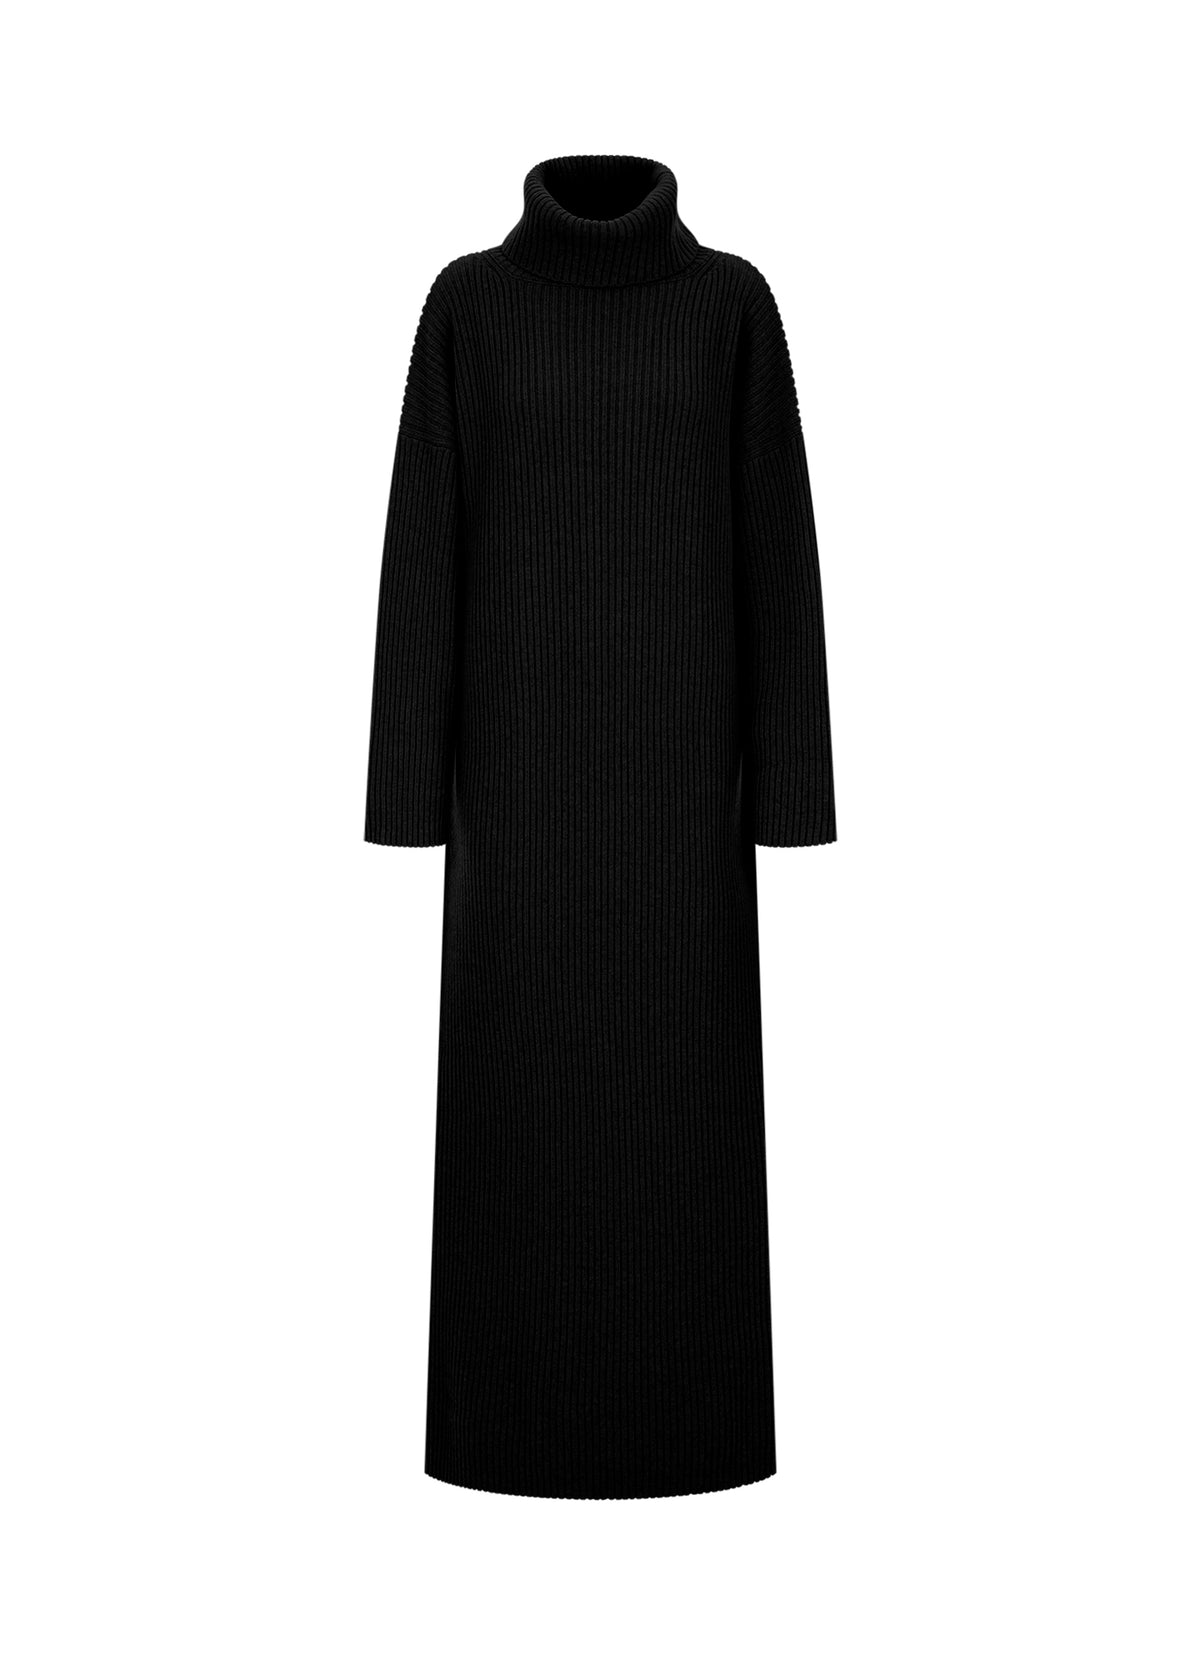 Designer cashmere dresses for women Black